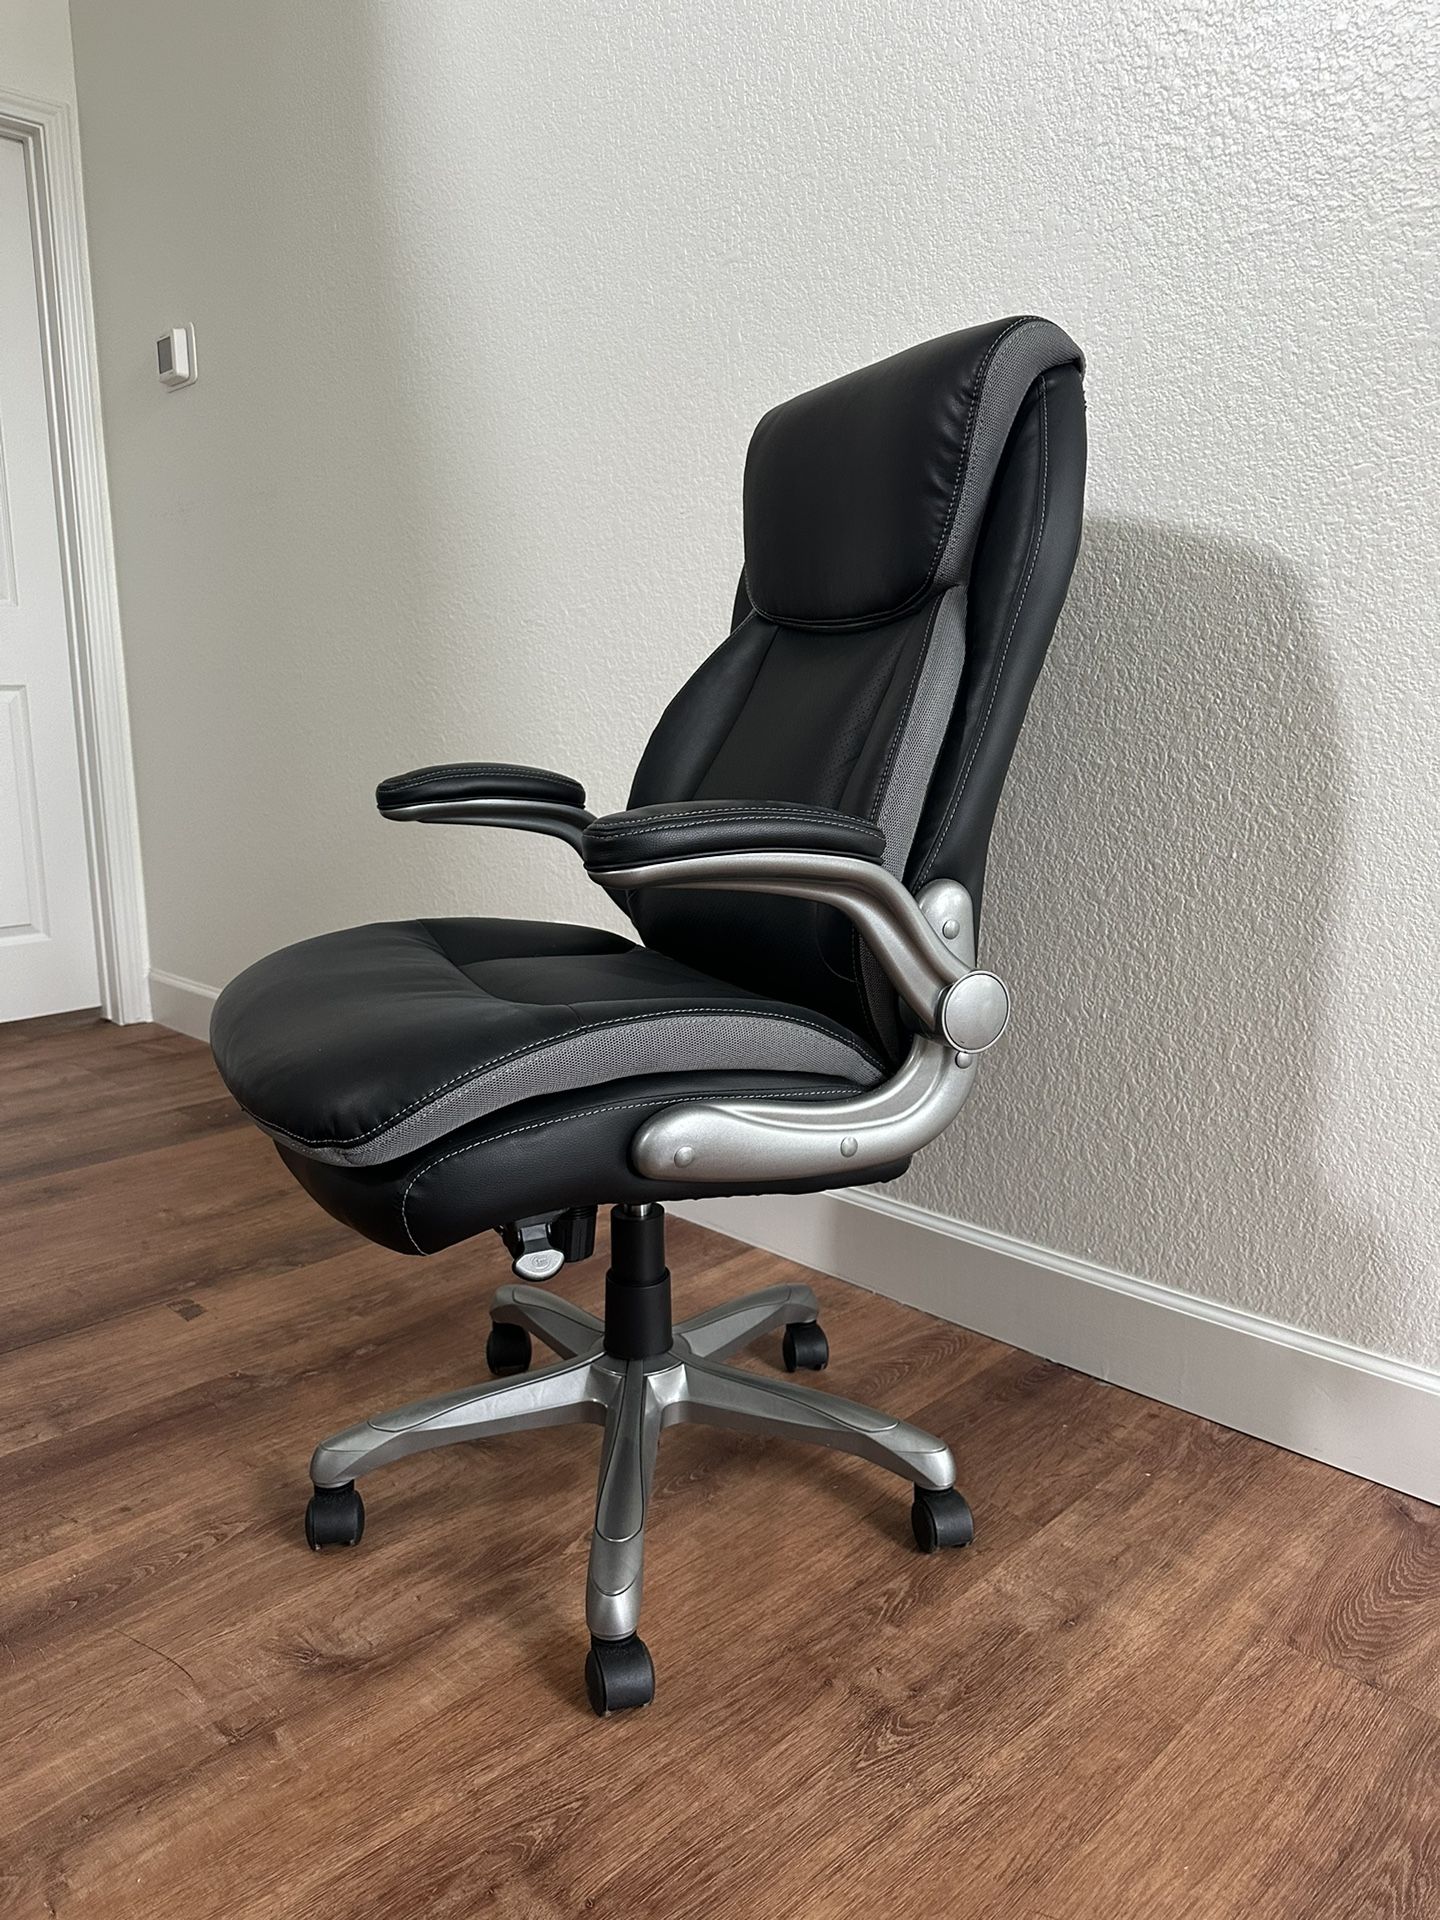 Serta® Smart Layers™ Brinkley Ergonomic Bonded Leather High-Back Executive Chair, Black/Silver